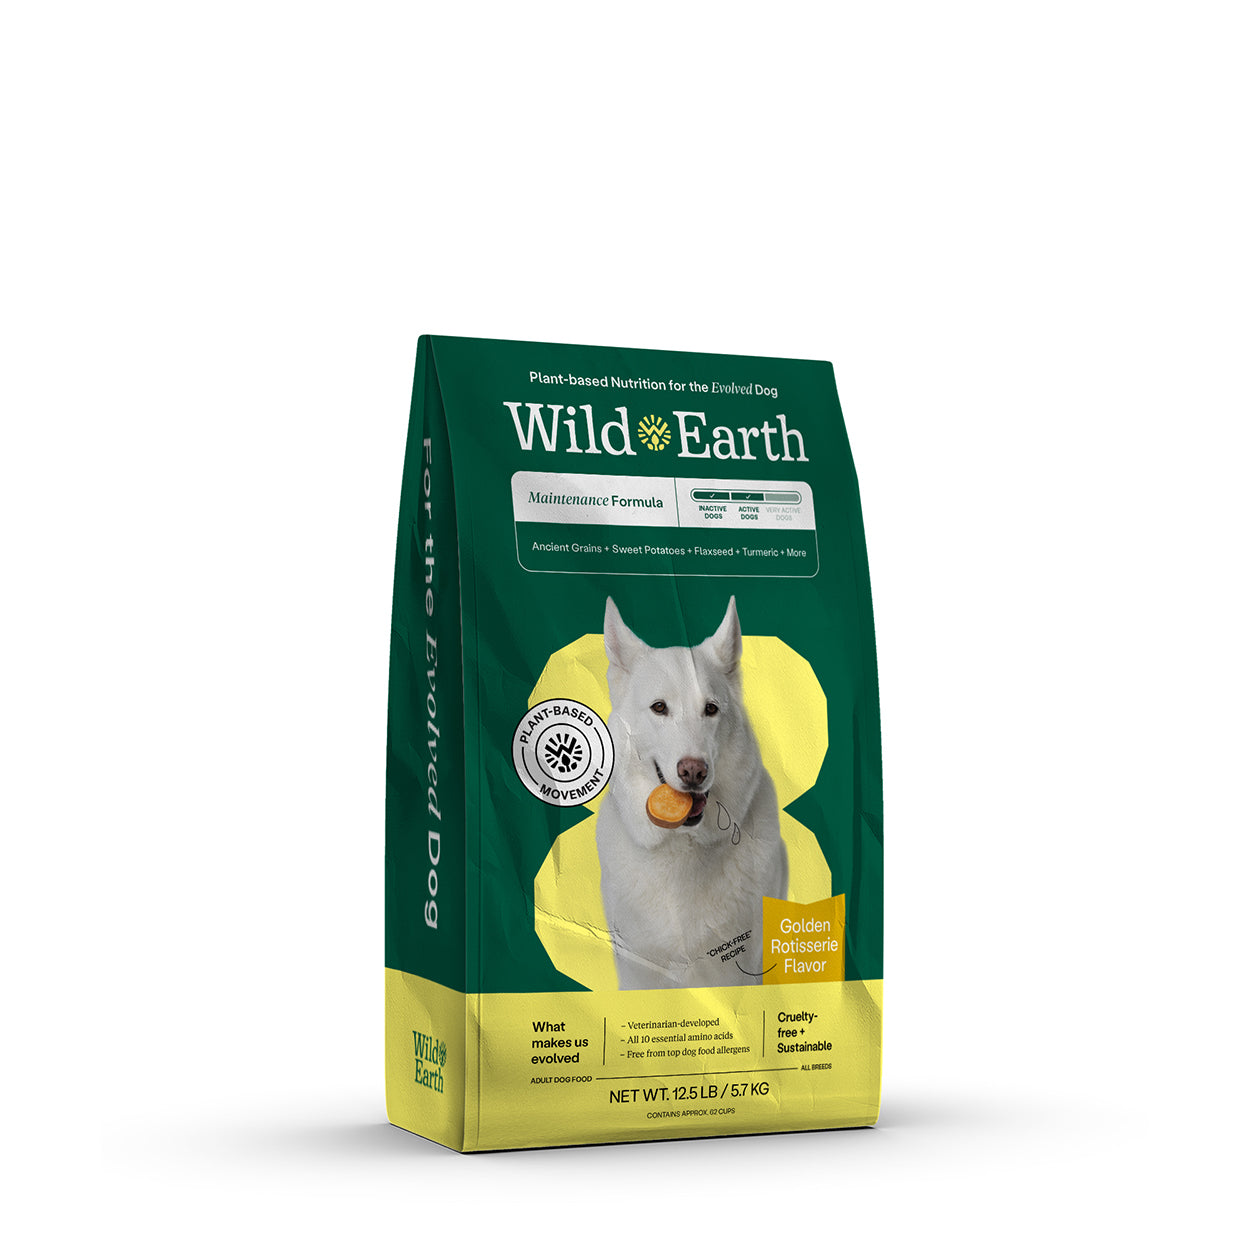 Maintenance Formula Dog Food by Wild Earth